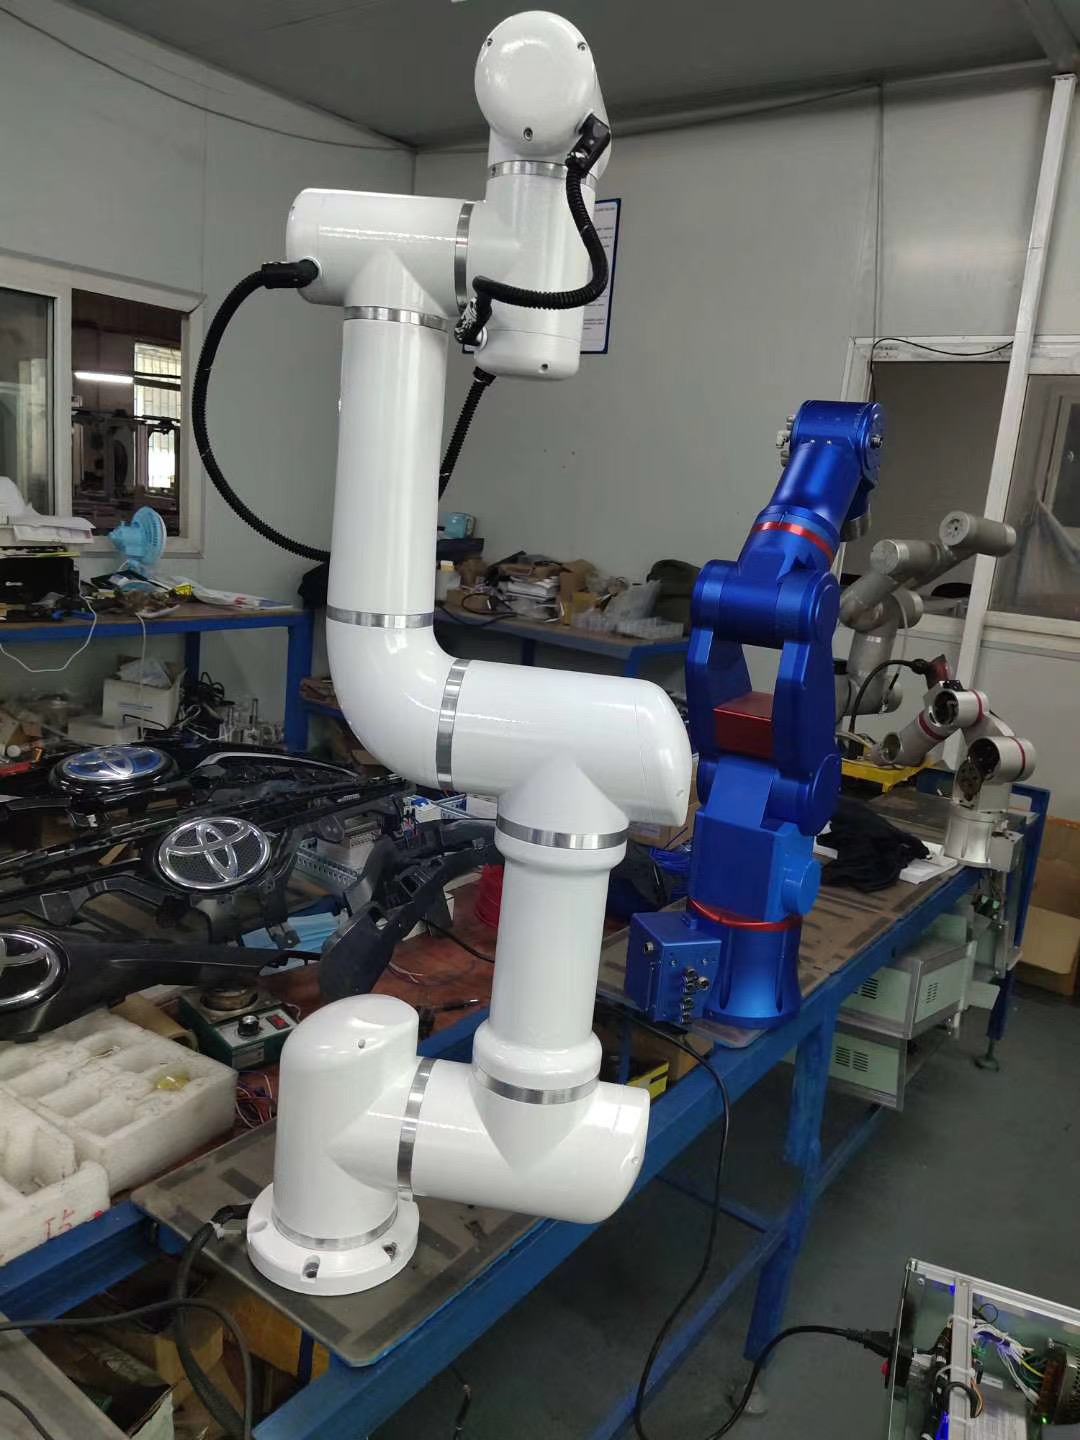 China educational robot 900mm working radius 6 axis robot(图6)